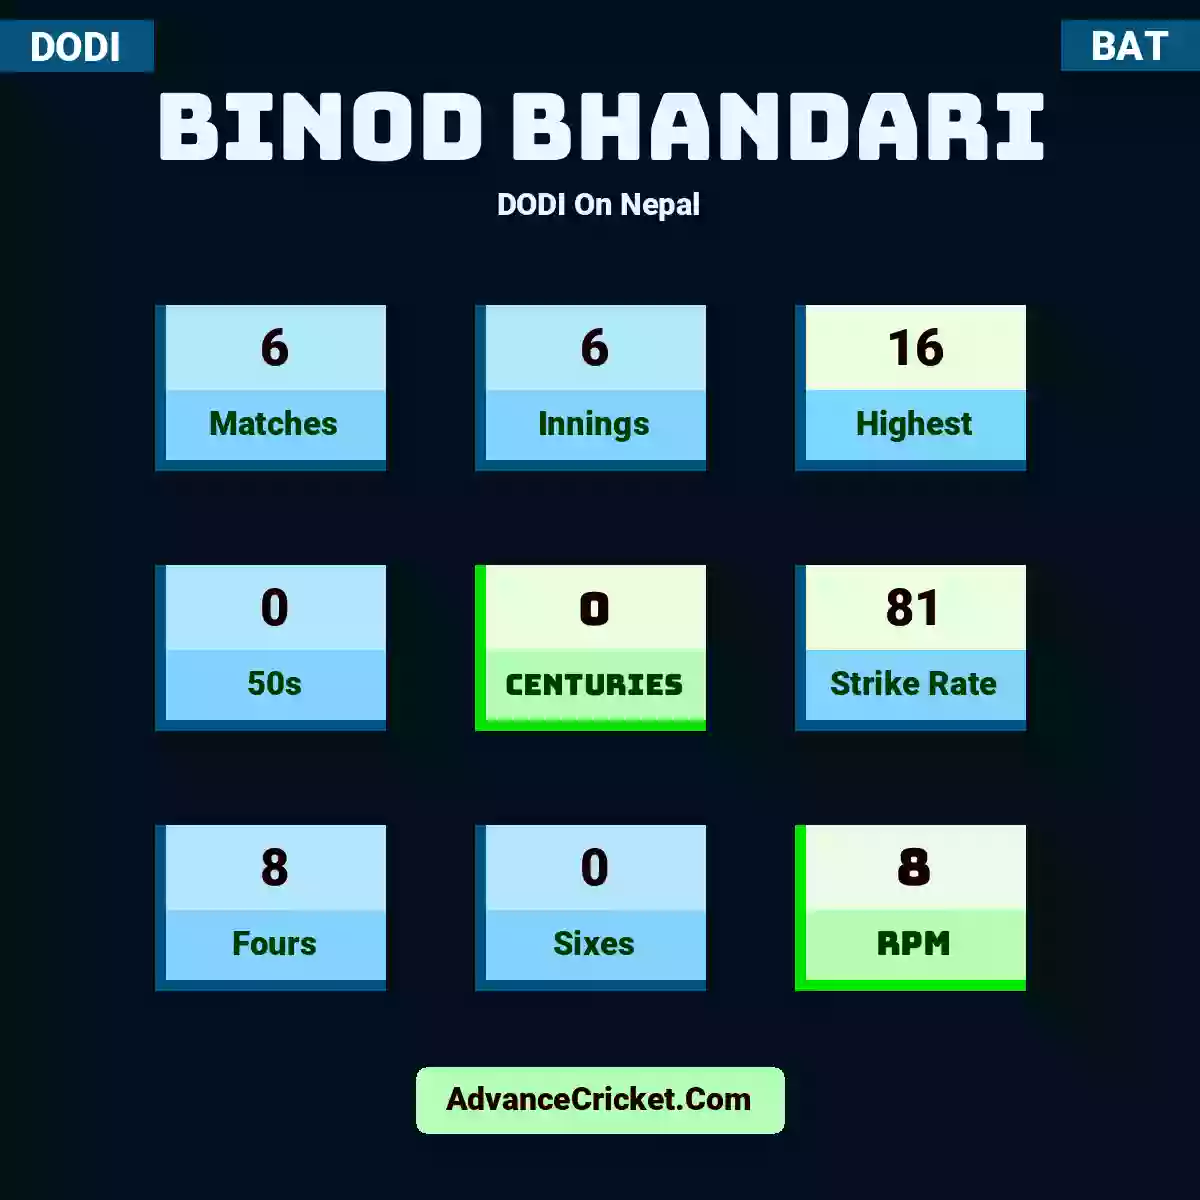 Binod Bhandari DODI  On Nepal, Binod Bhandari played 6 matches, scored 16 runs as highest, 0 half-centuries, and 0 centuries, with a strike rate of 81. B.Bhandari hit 8 fours and 0 sixes, with an RPM of 8.